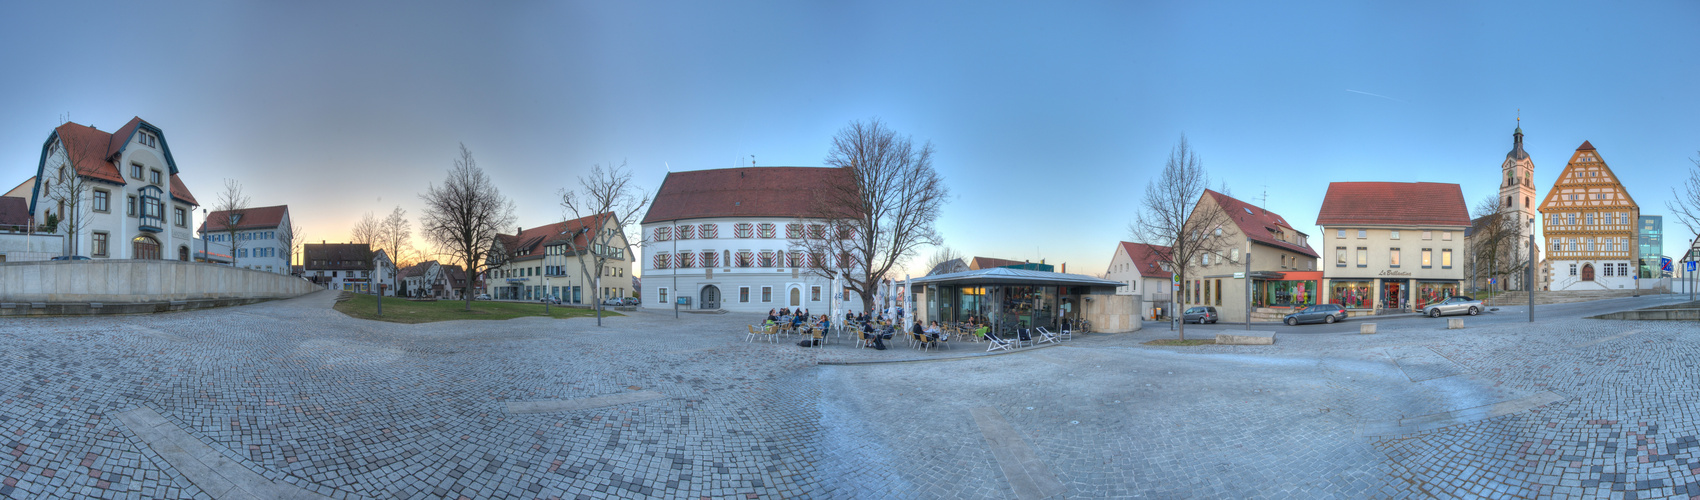 Neuhausen Panorama am Schloßplatz